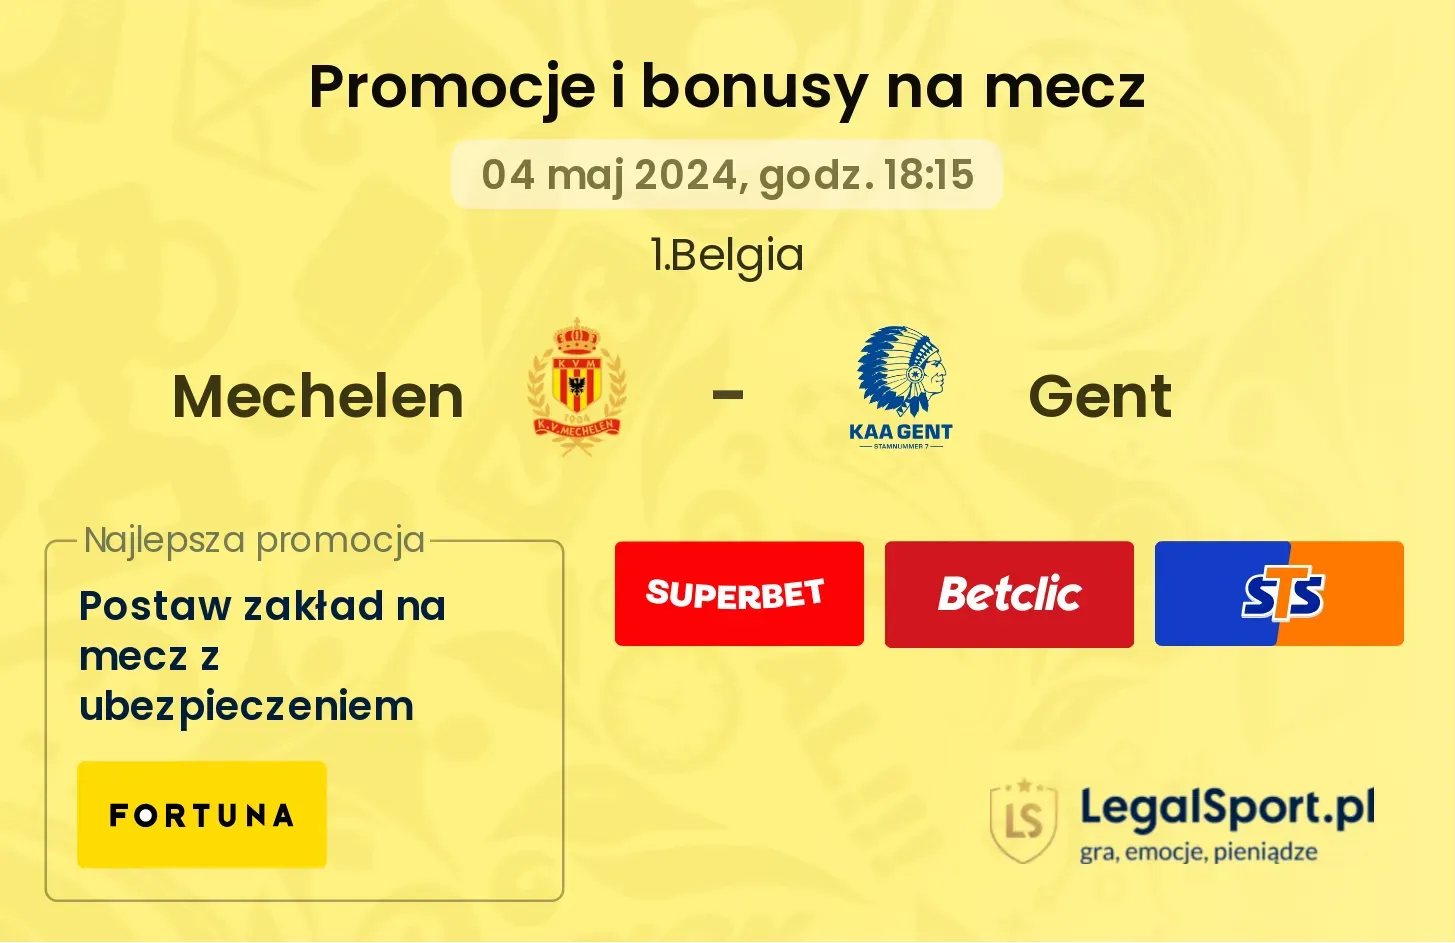 Mechelen - Gent promocje bonusy na mecz